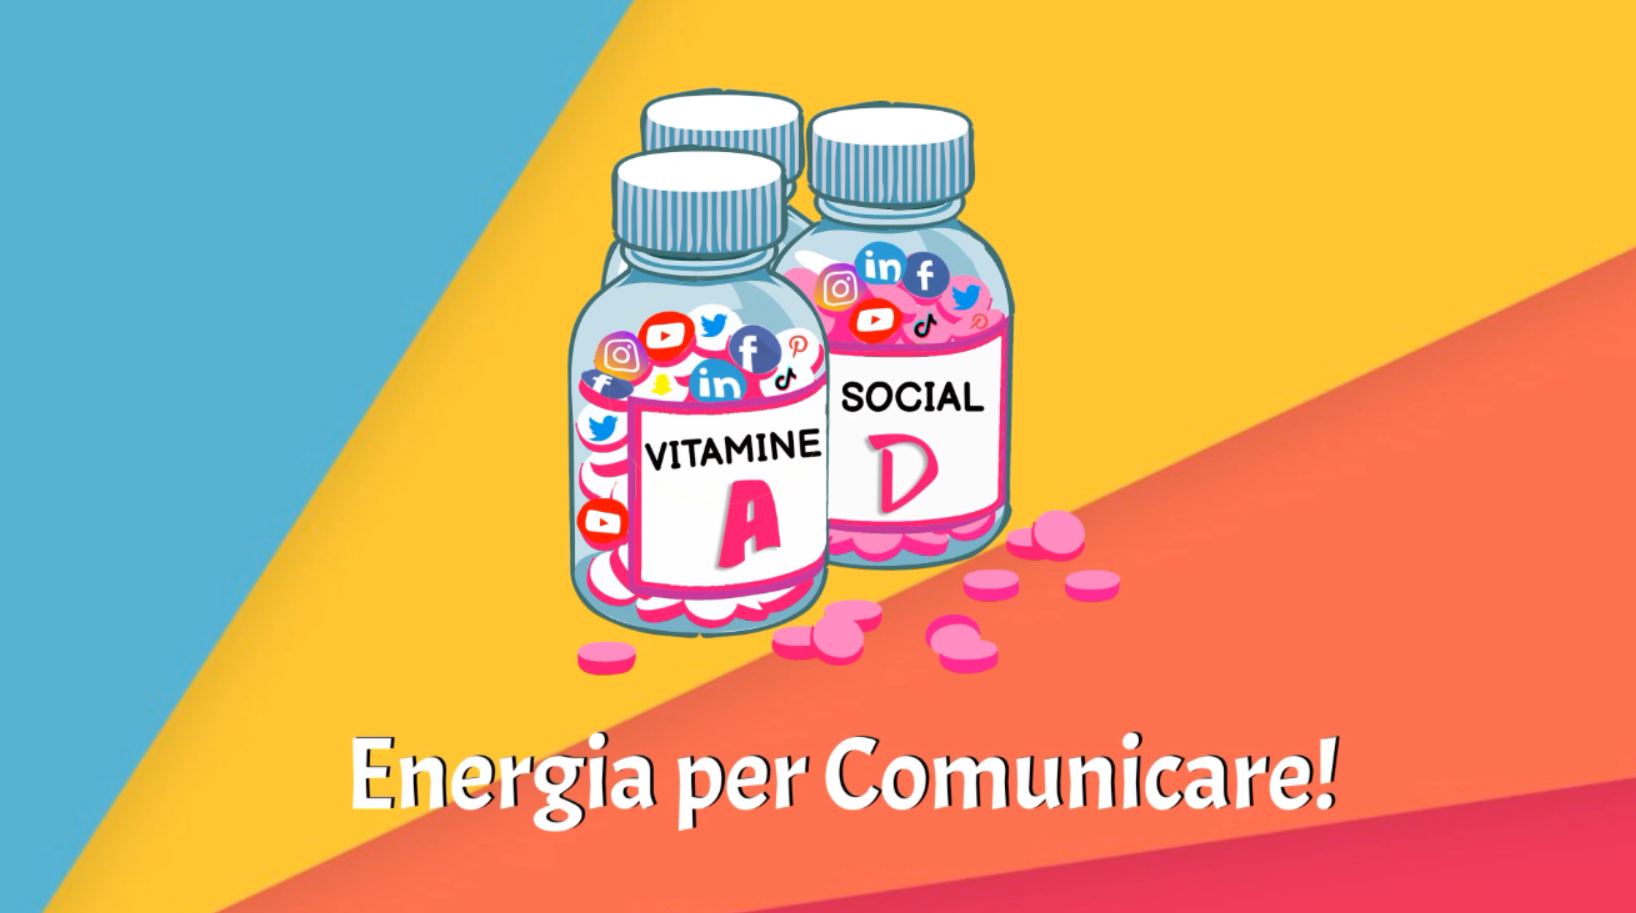 Vitamine Social AD Communications Accademia Polliarte